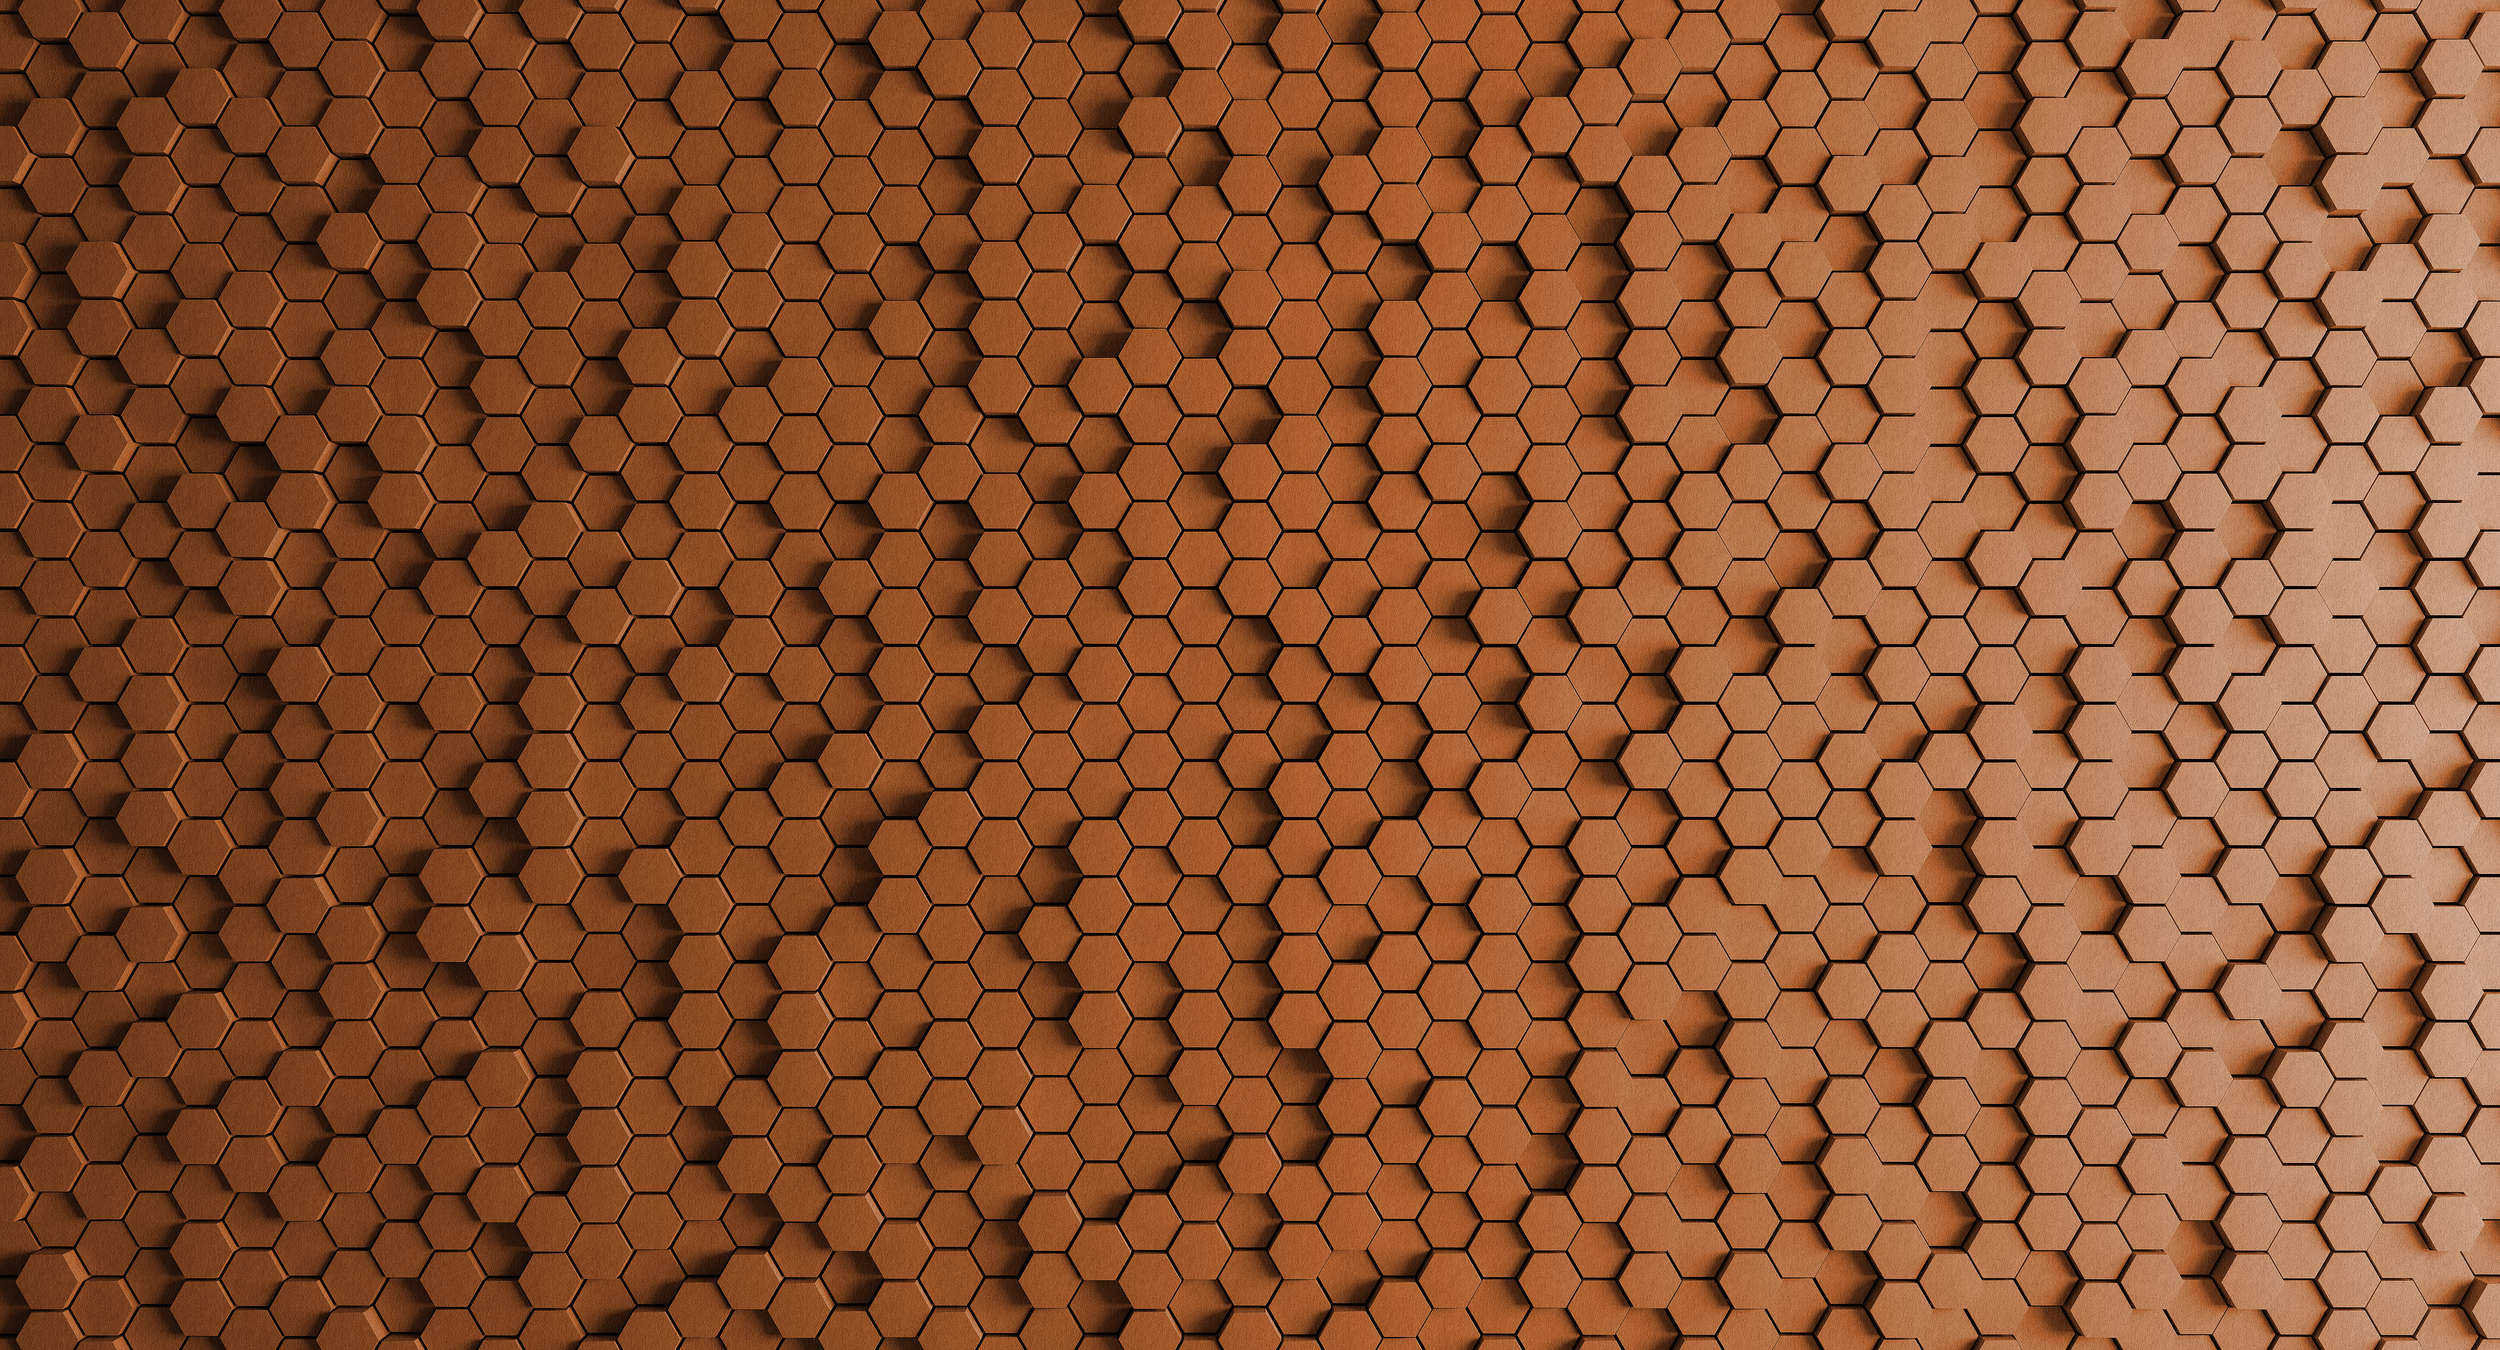             Honeycomb 2 - Carta da parati 3D con disegno a nido d'ape arancione - struttura in feltro - rame, arancione | struttura in tessuto non tessuto
        